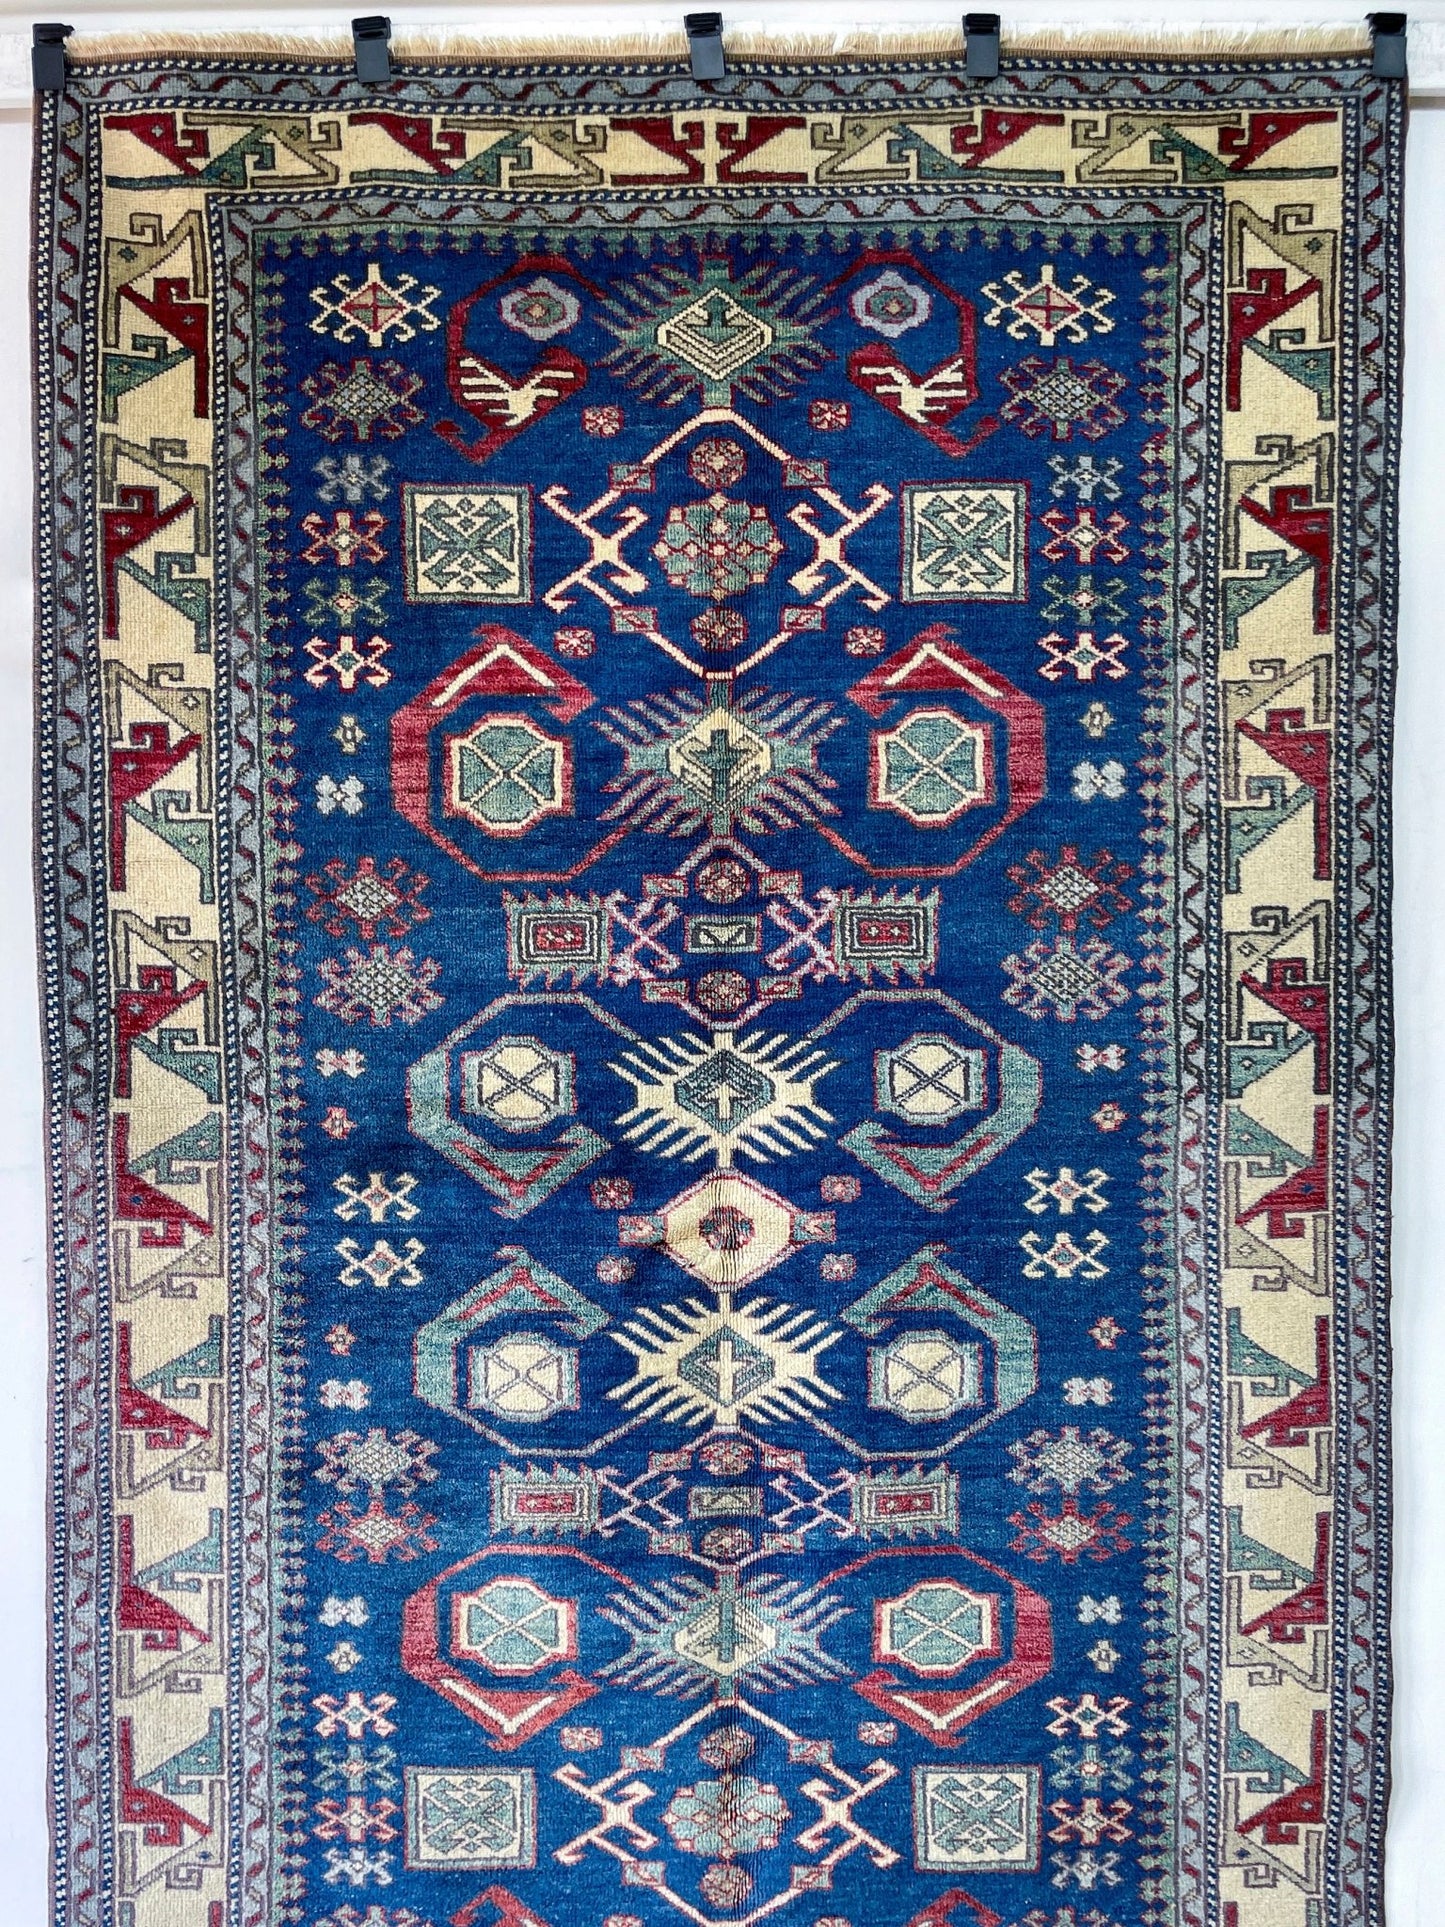 kars blue vintage turkish rug san francisco bay area oriental rug shop palo alto berkeley blue turkish rug shopping